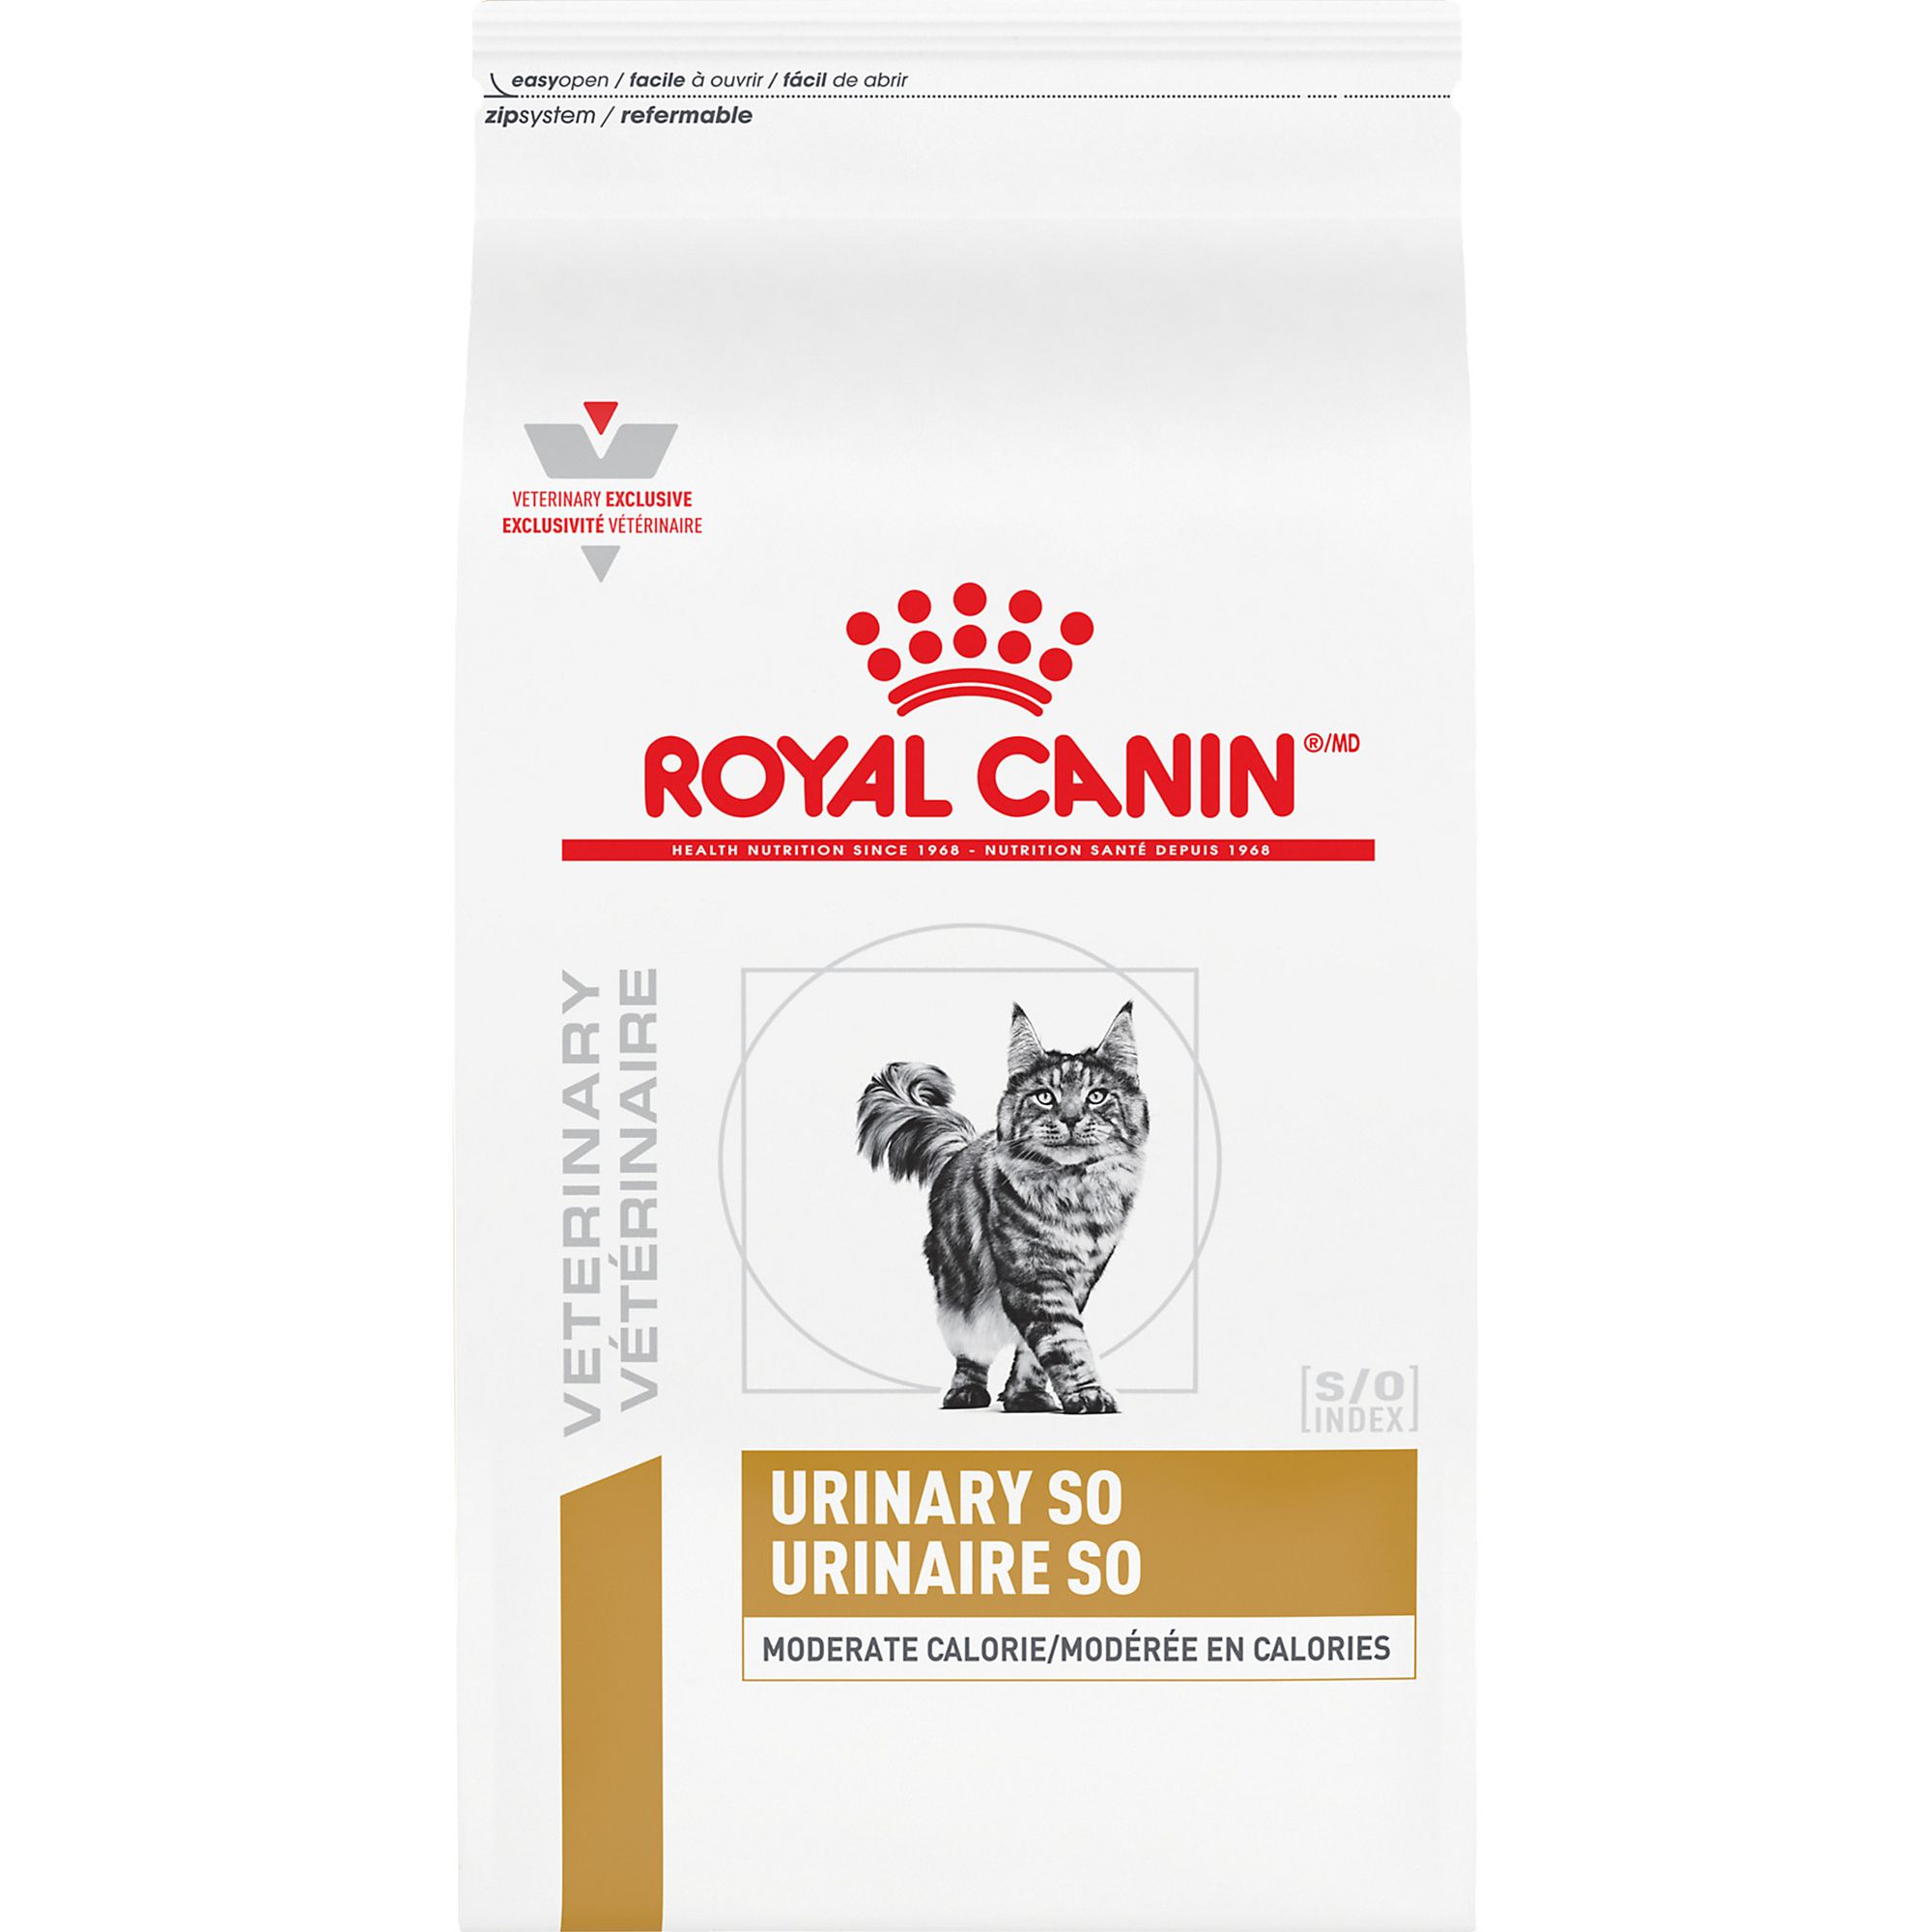 Royal Canin Urinary So Dry Cat Food